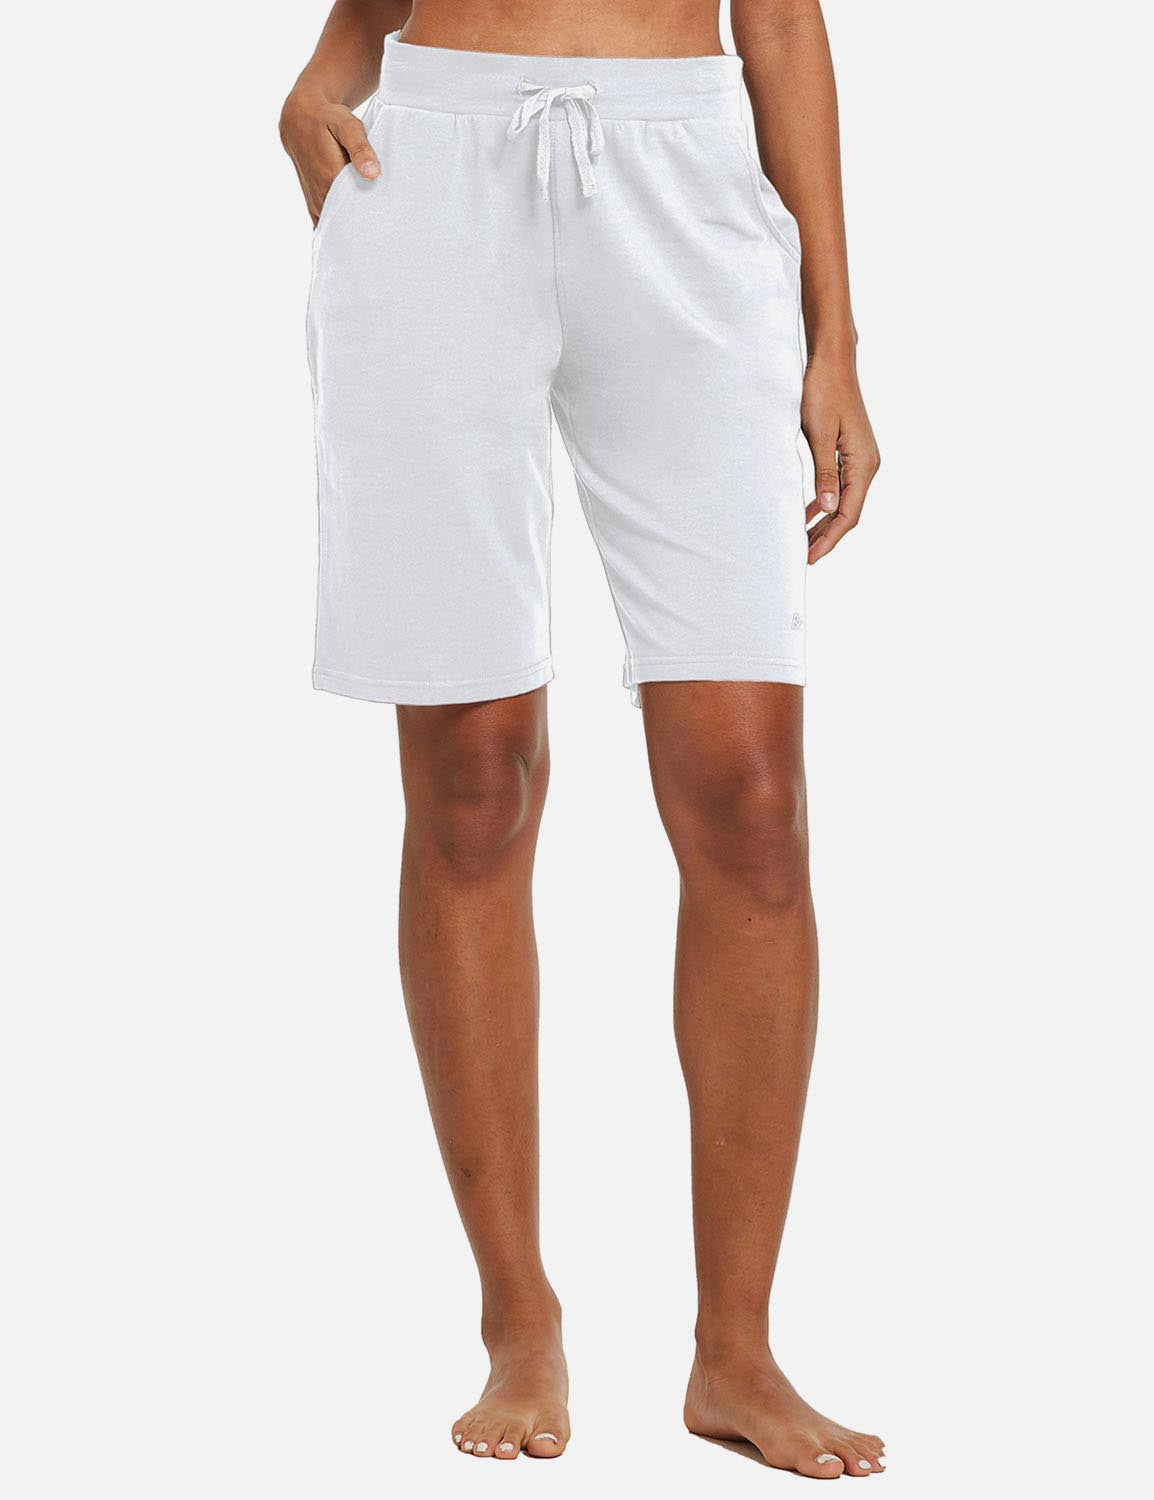 Baleaf Women's Cotton Straight Leg Pocketed Weekend Bermuda Shorts abh179 White Front